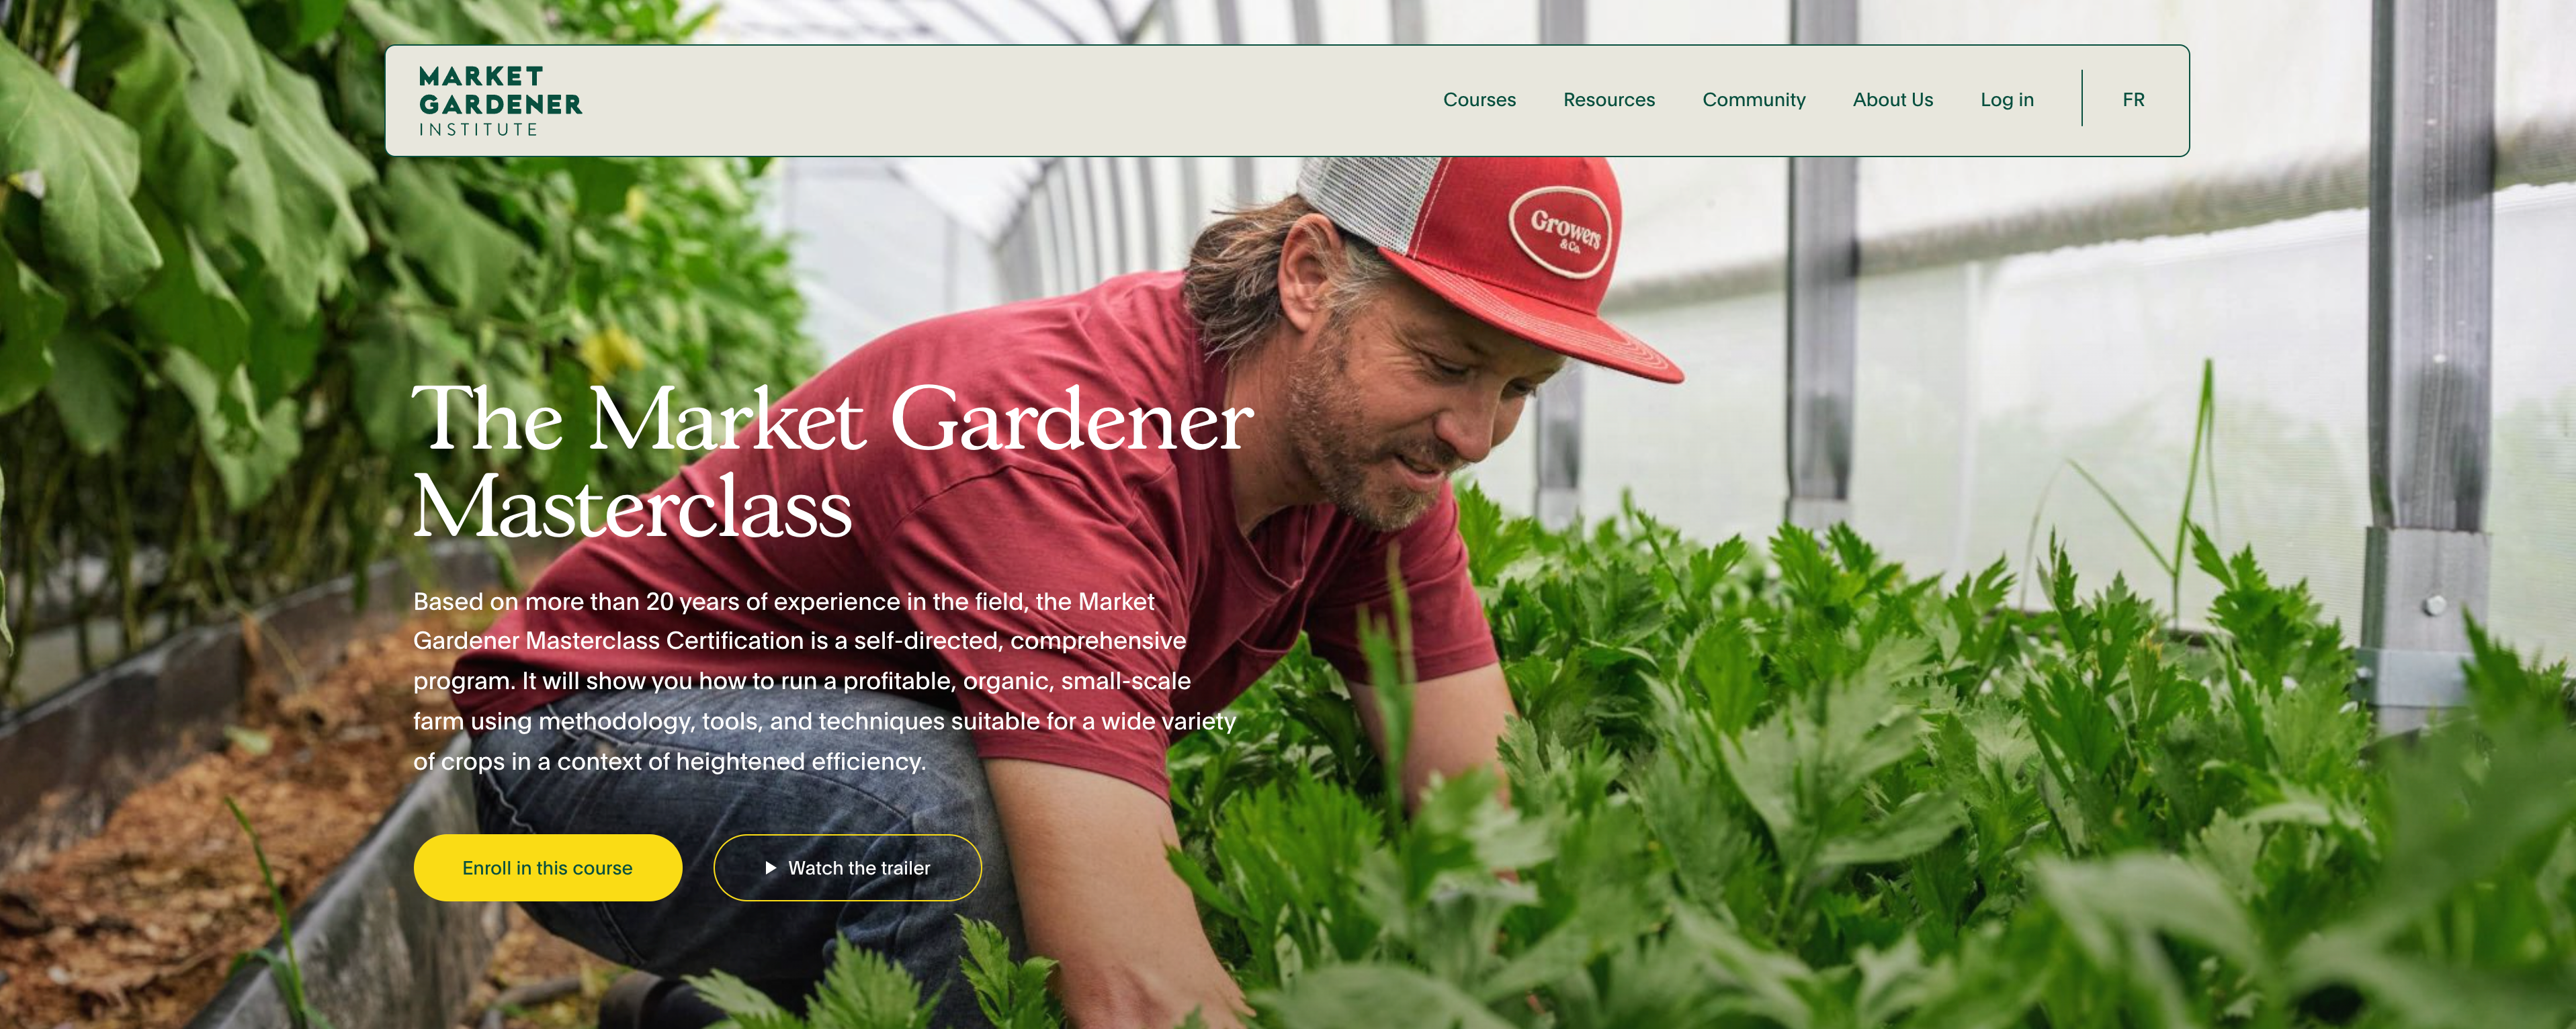 The Market Gardener Masterclass